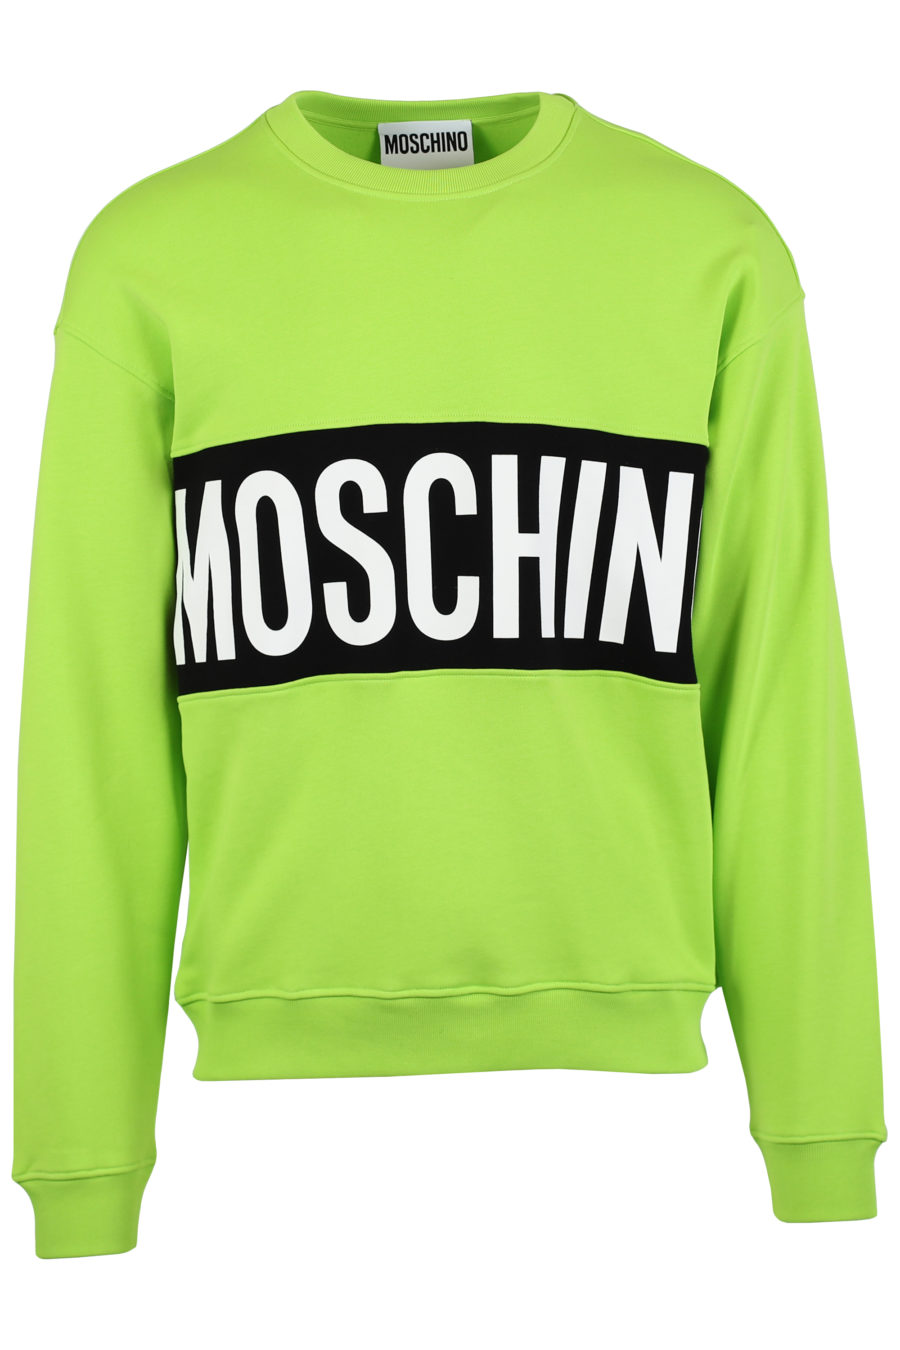 Fluor green sweatshirt with large logo - IMG 0910